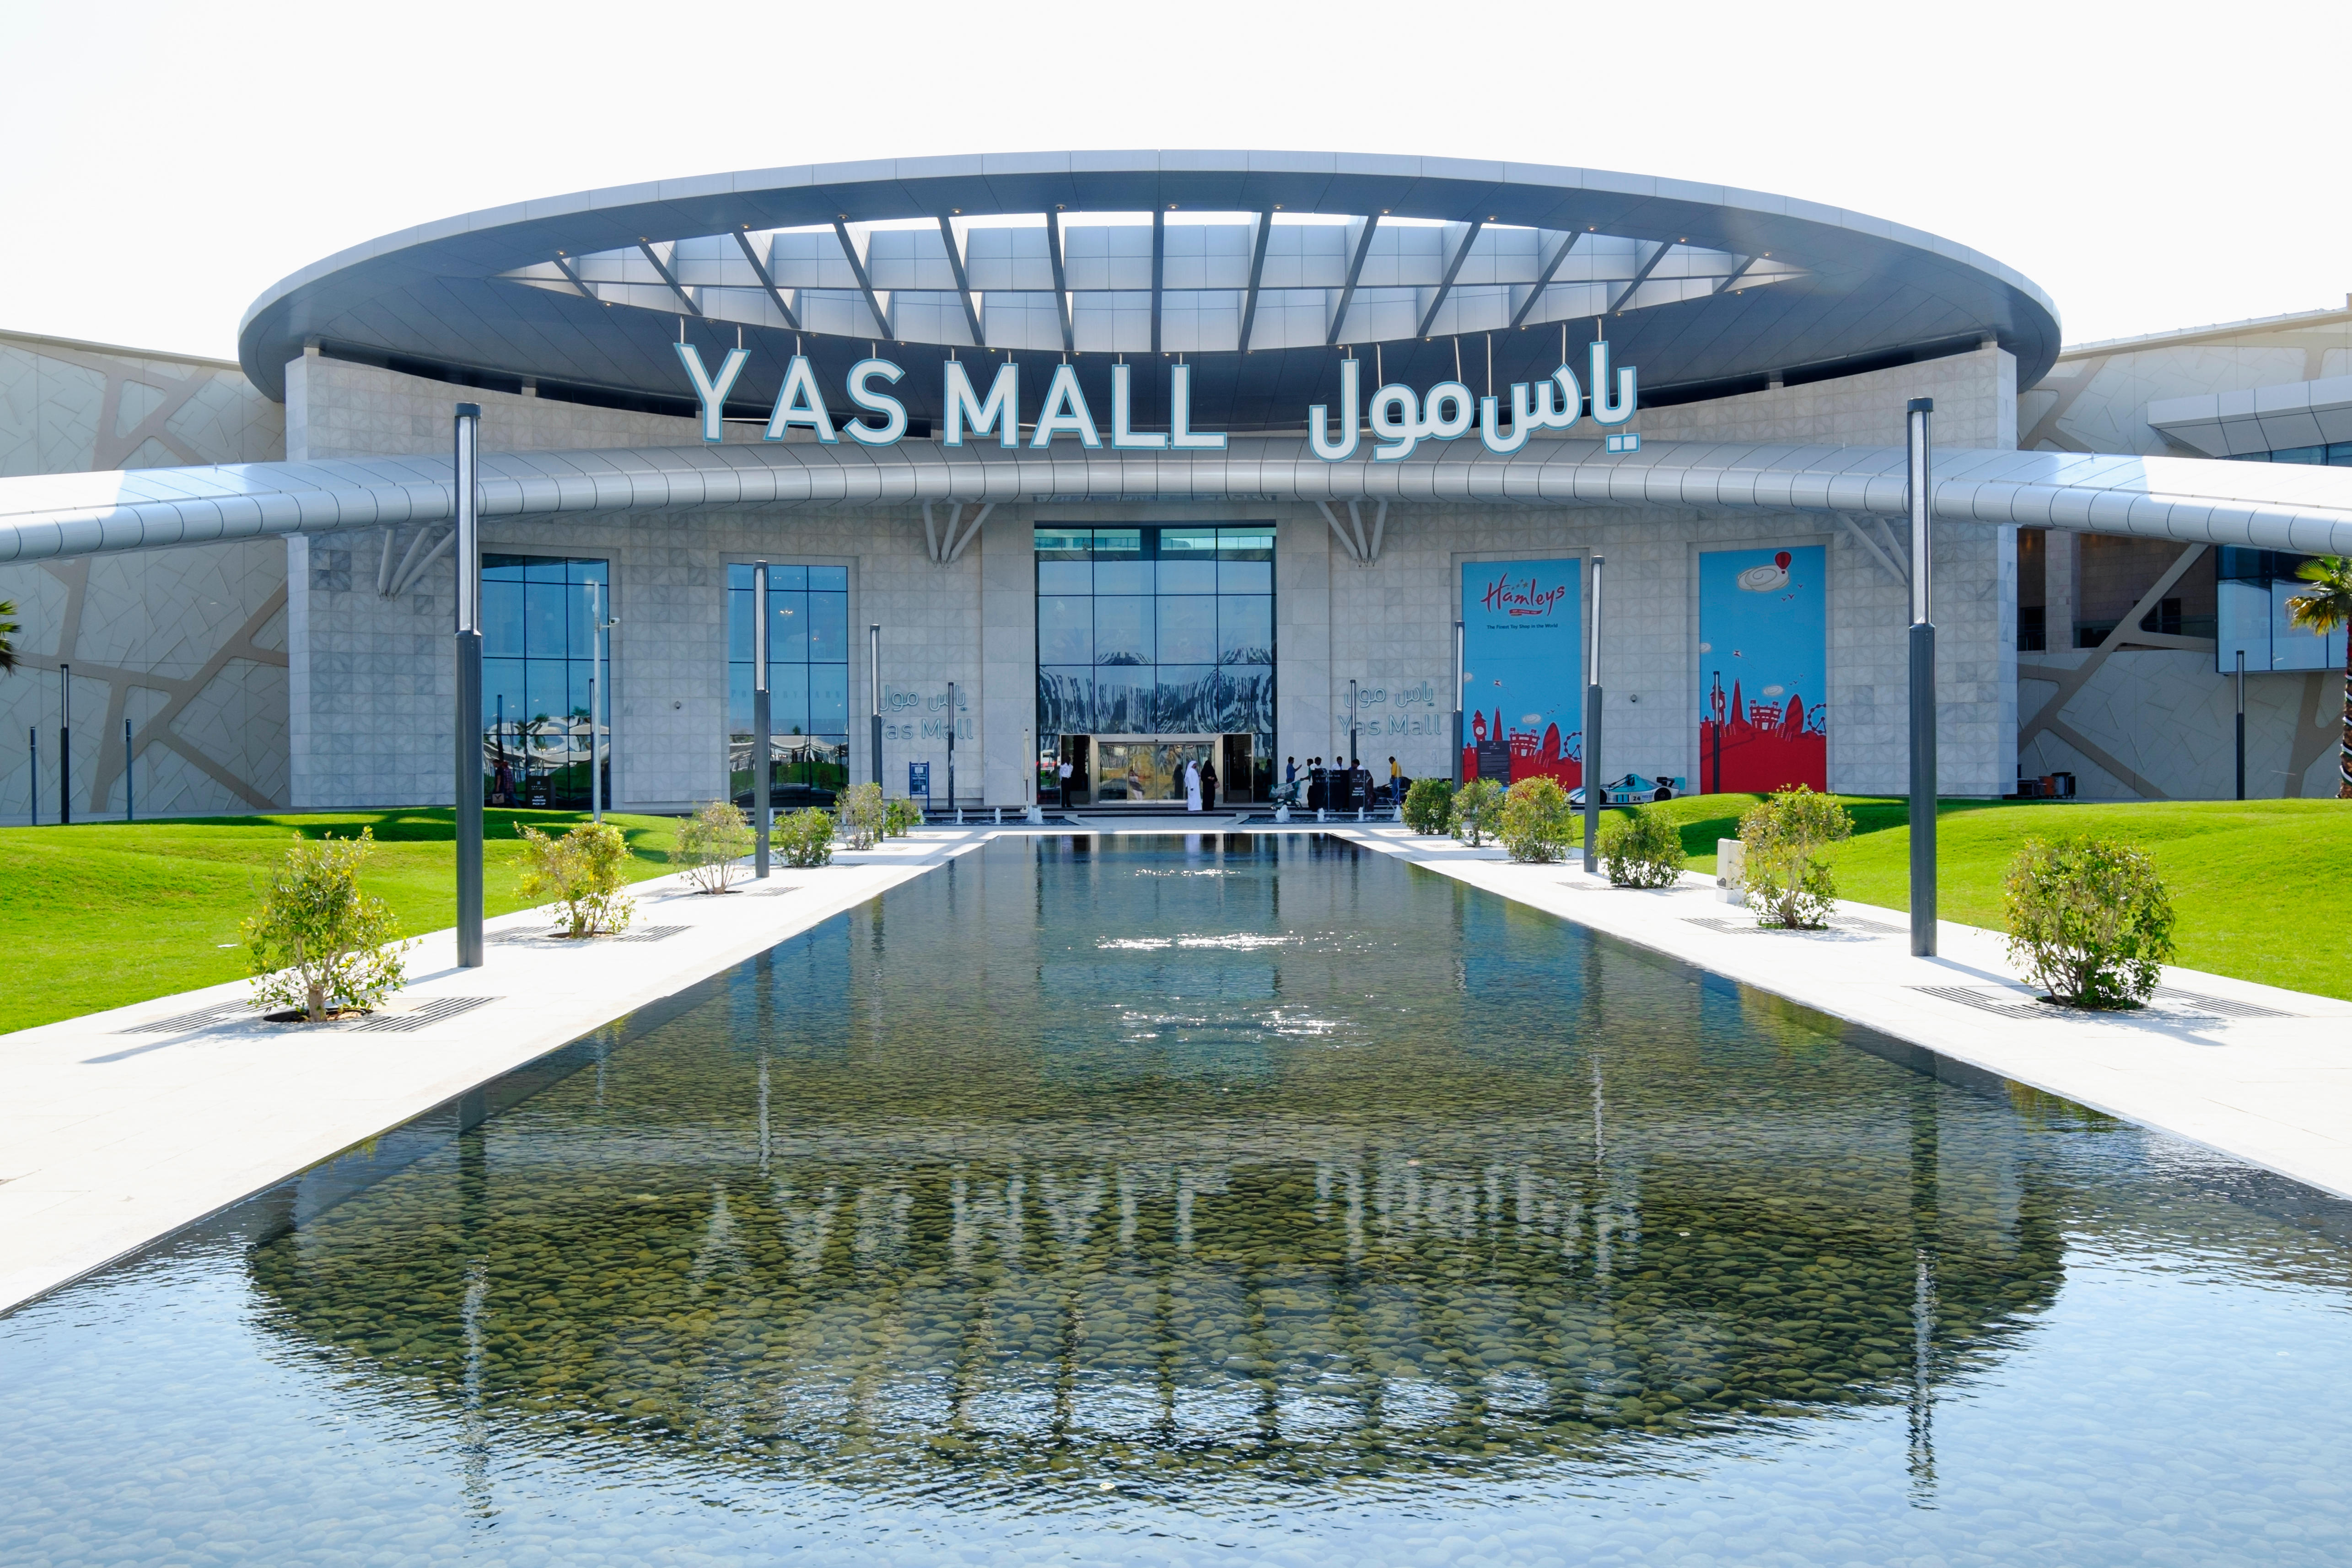 Yas Mall Reflection Pond